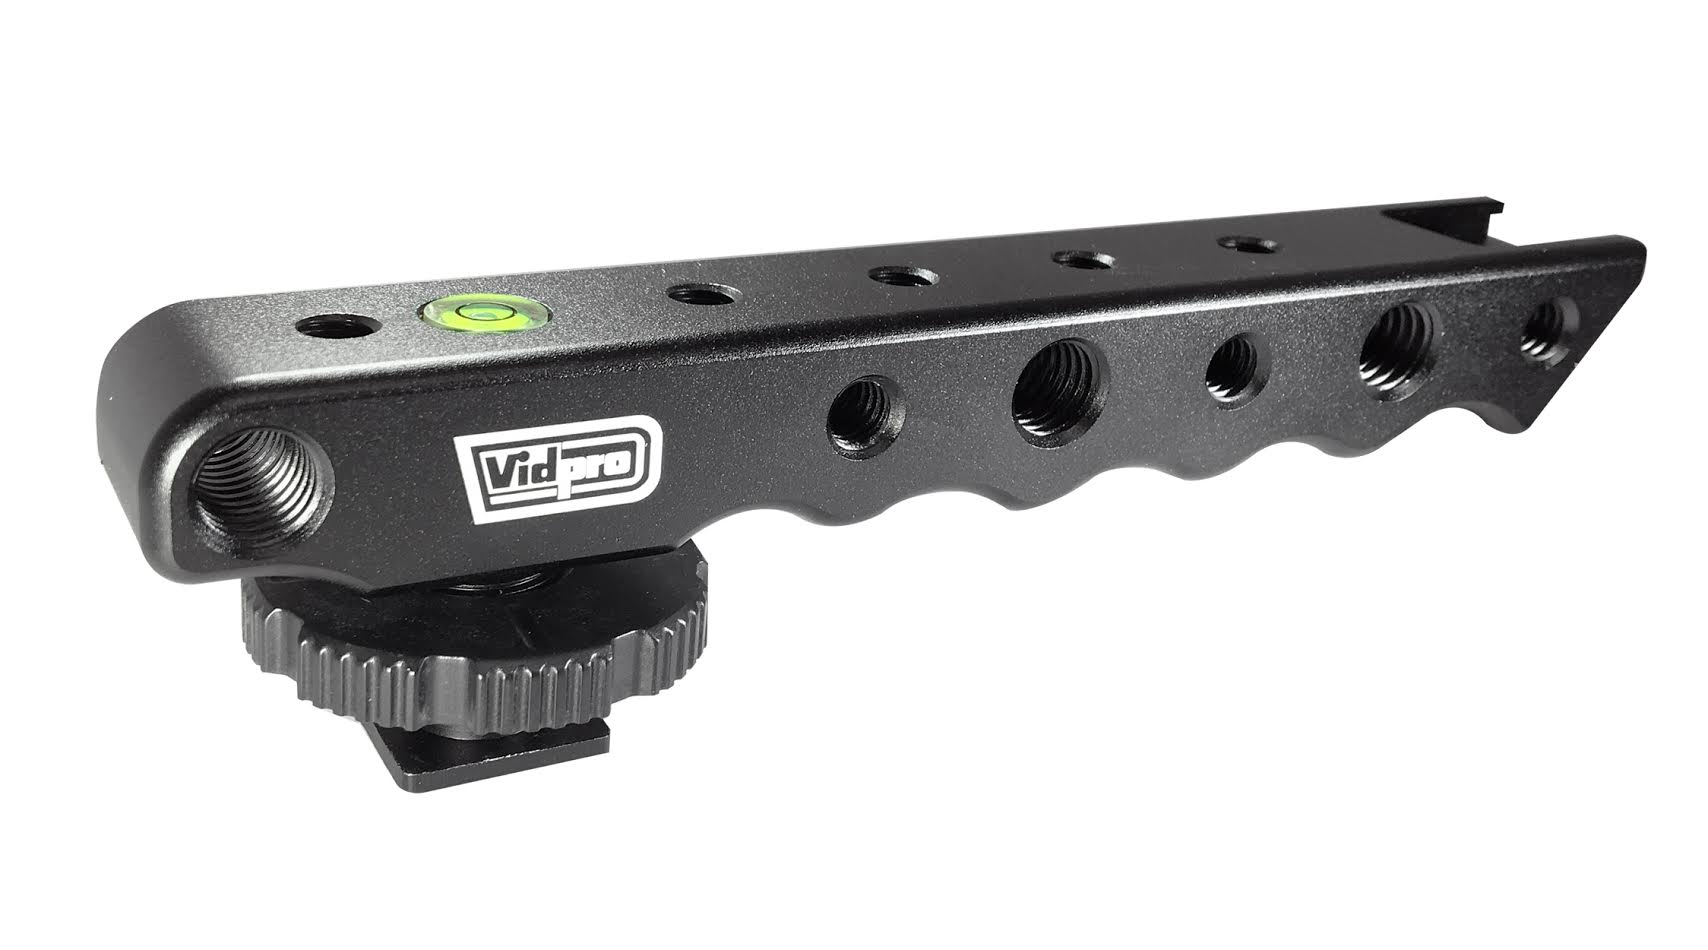 Video Stabilizers for Vivitar DVR 690HD Camcorder